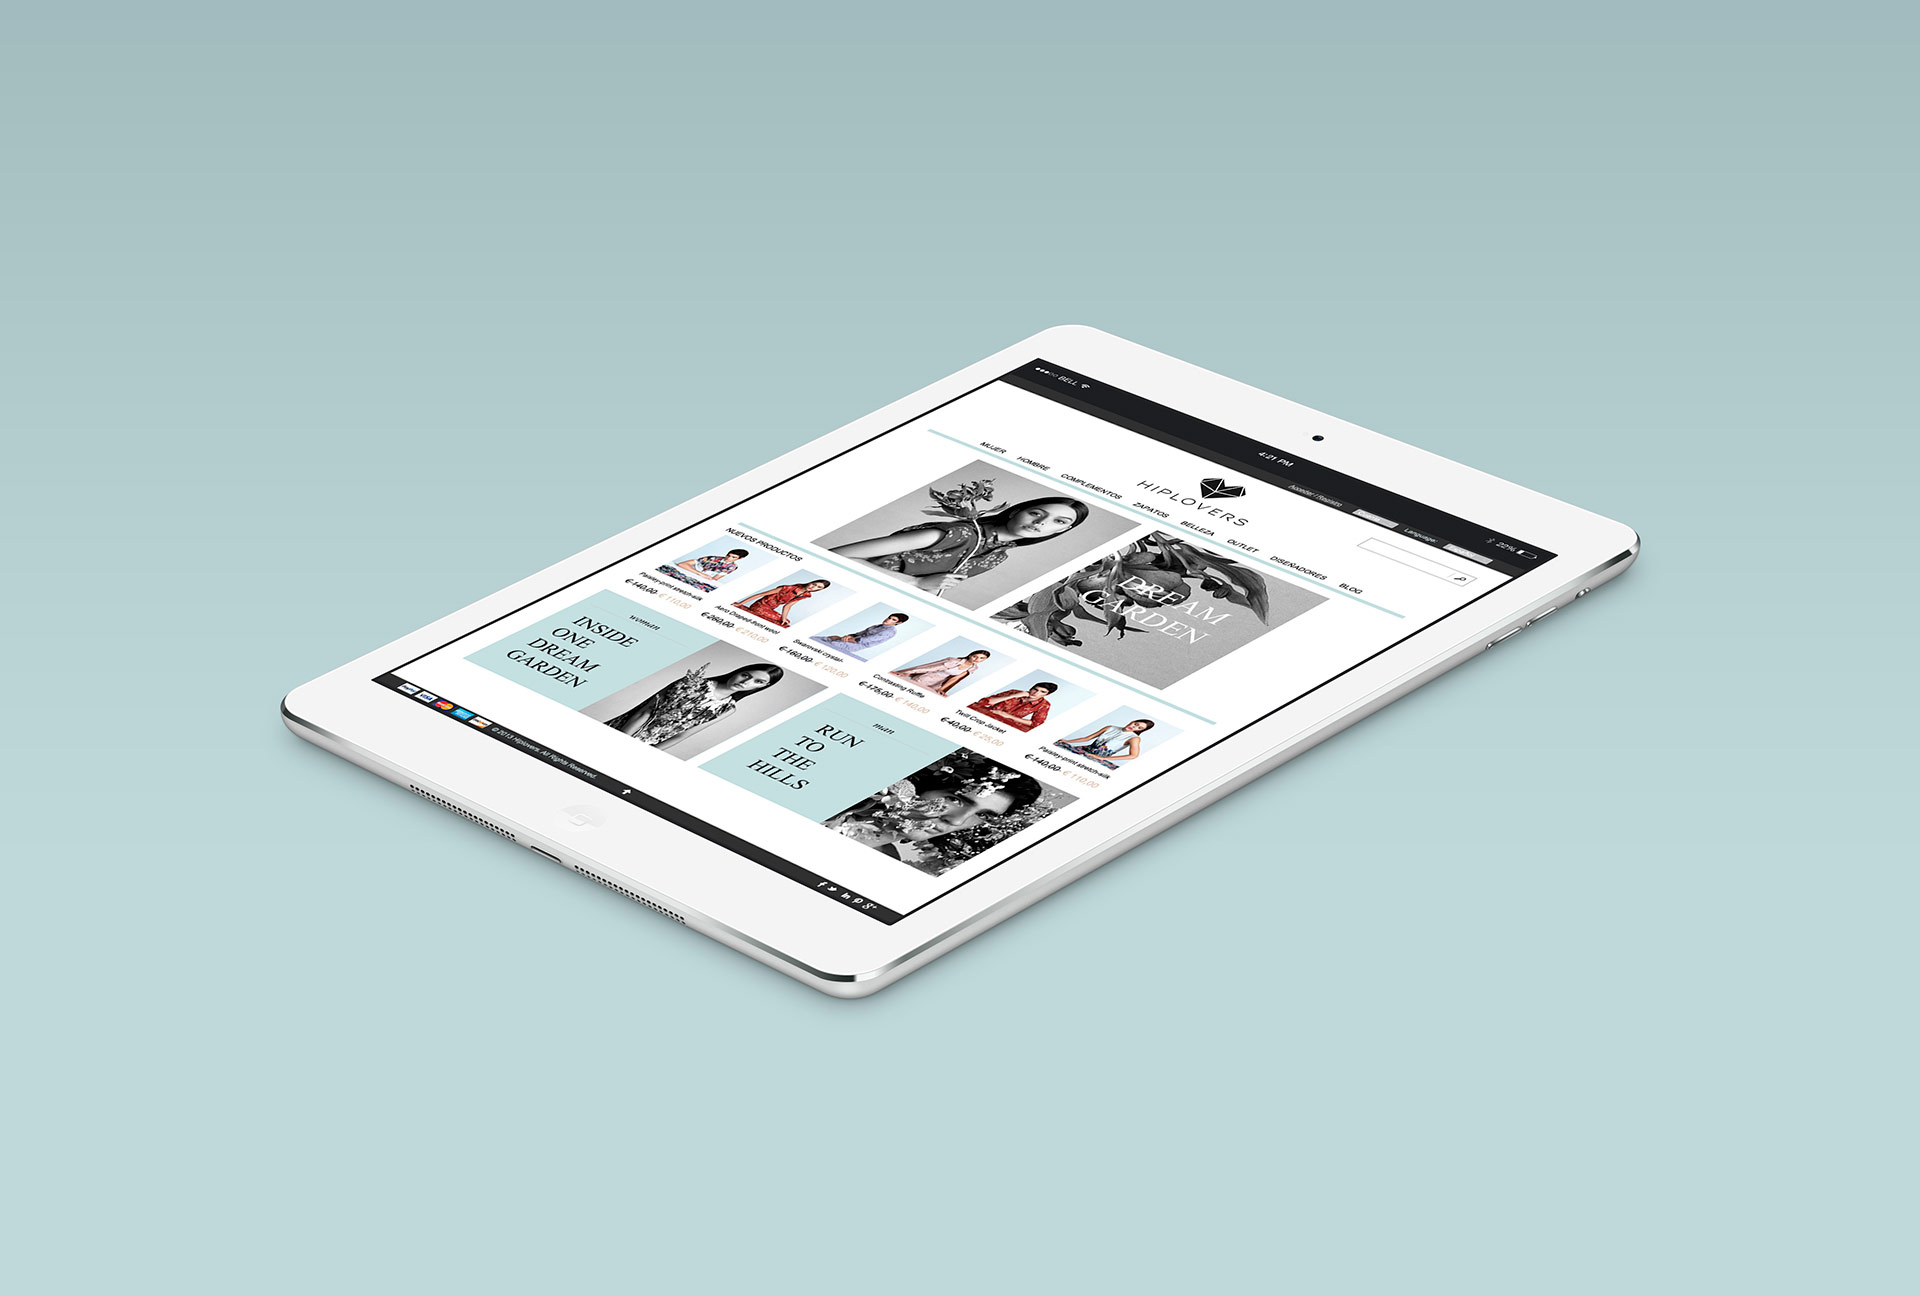 hiplovers-iPad-Air